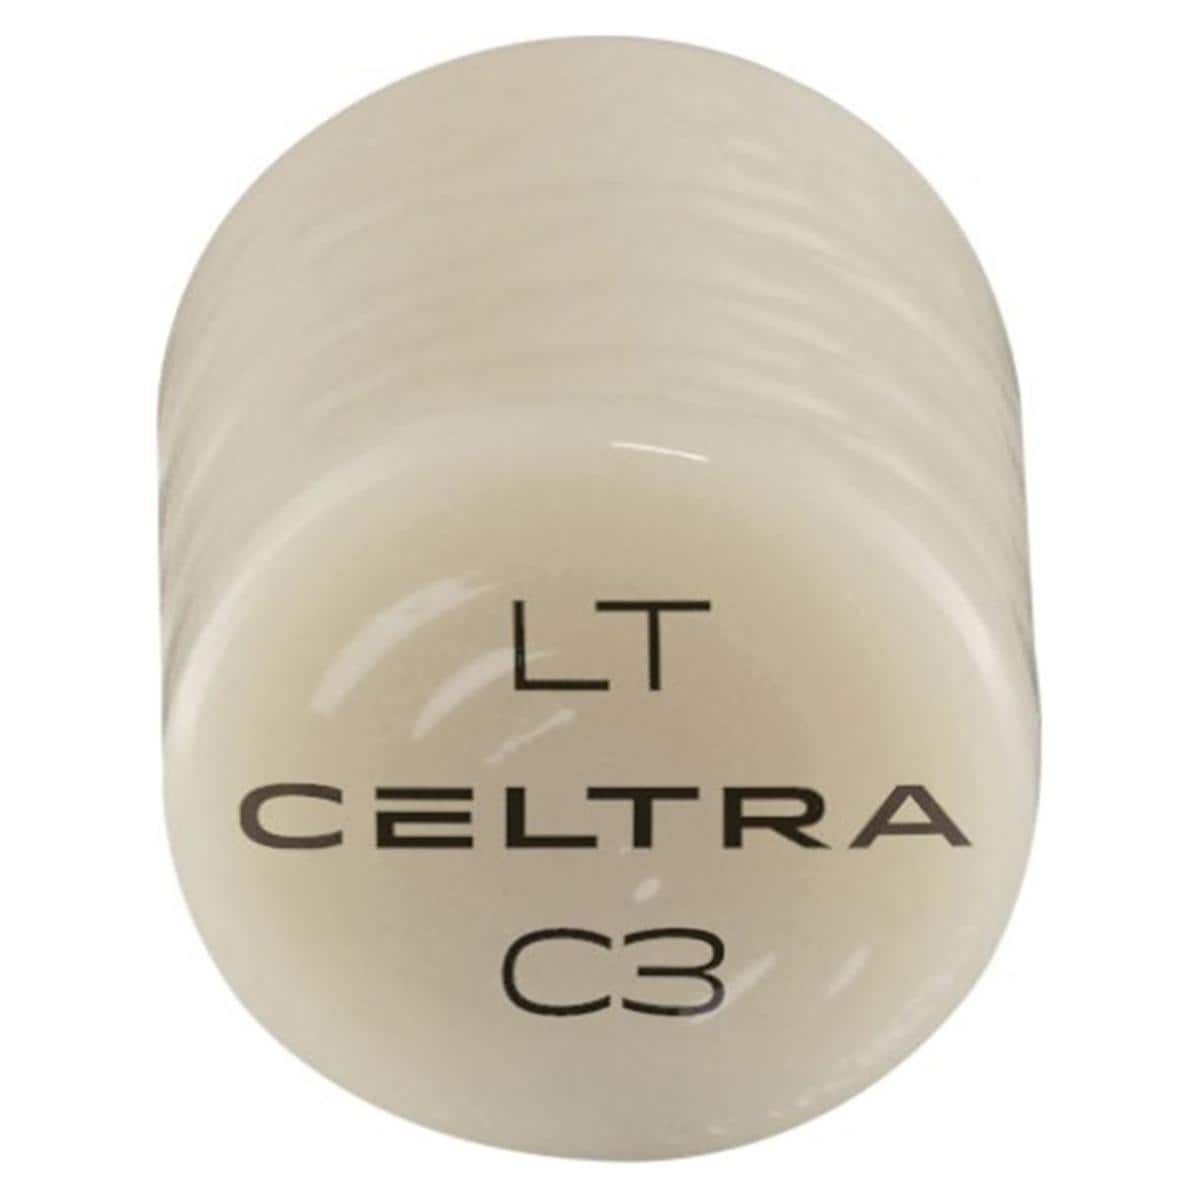 CELTRA® Press LT - C3, Packung 3 x 6 g